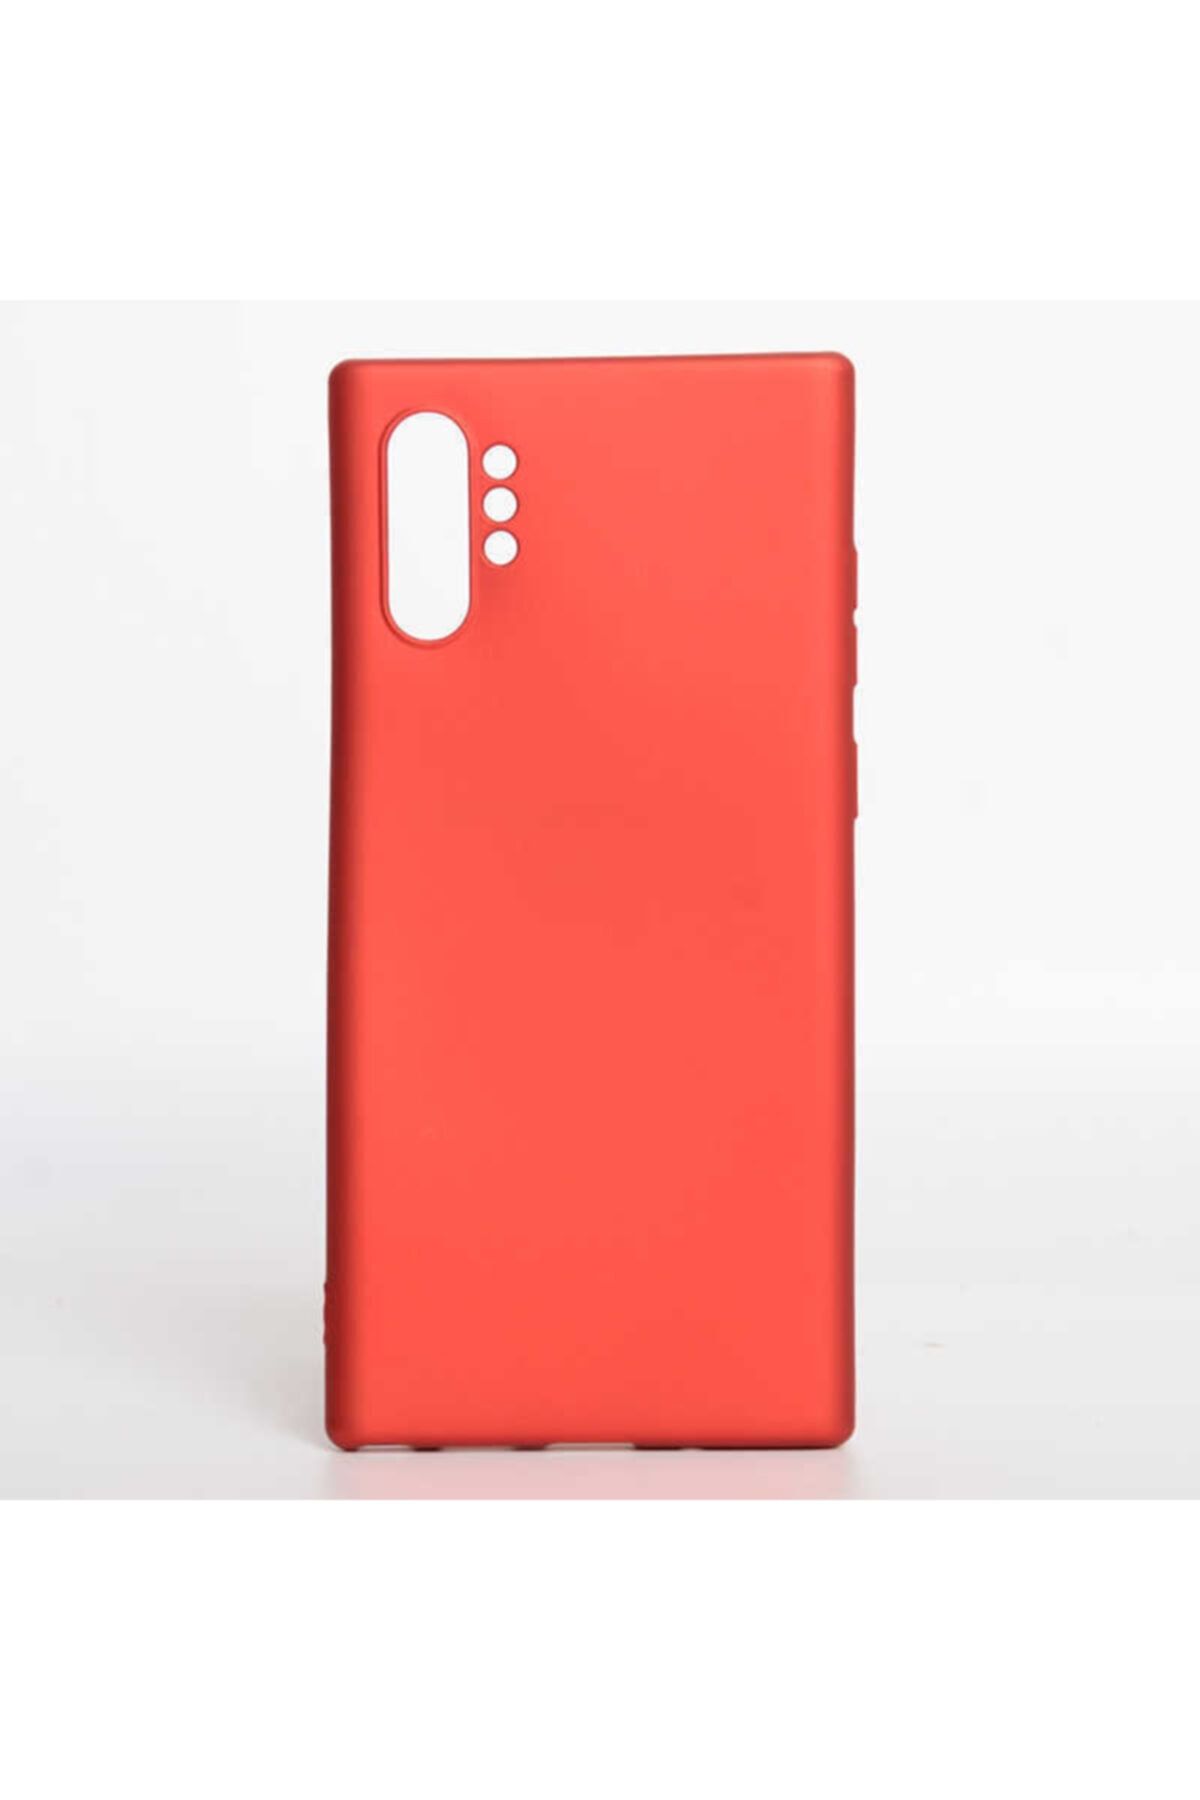 İncisoft Galaxy Note 10 Plus Uyumlu Ince Yumuşak Soft Tasarım Renkli Silikon Kılıf